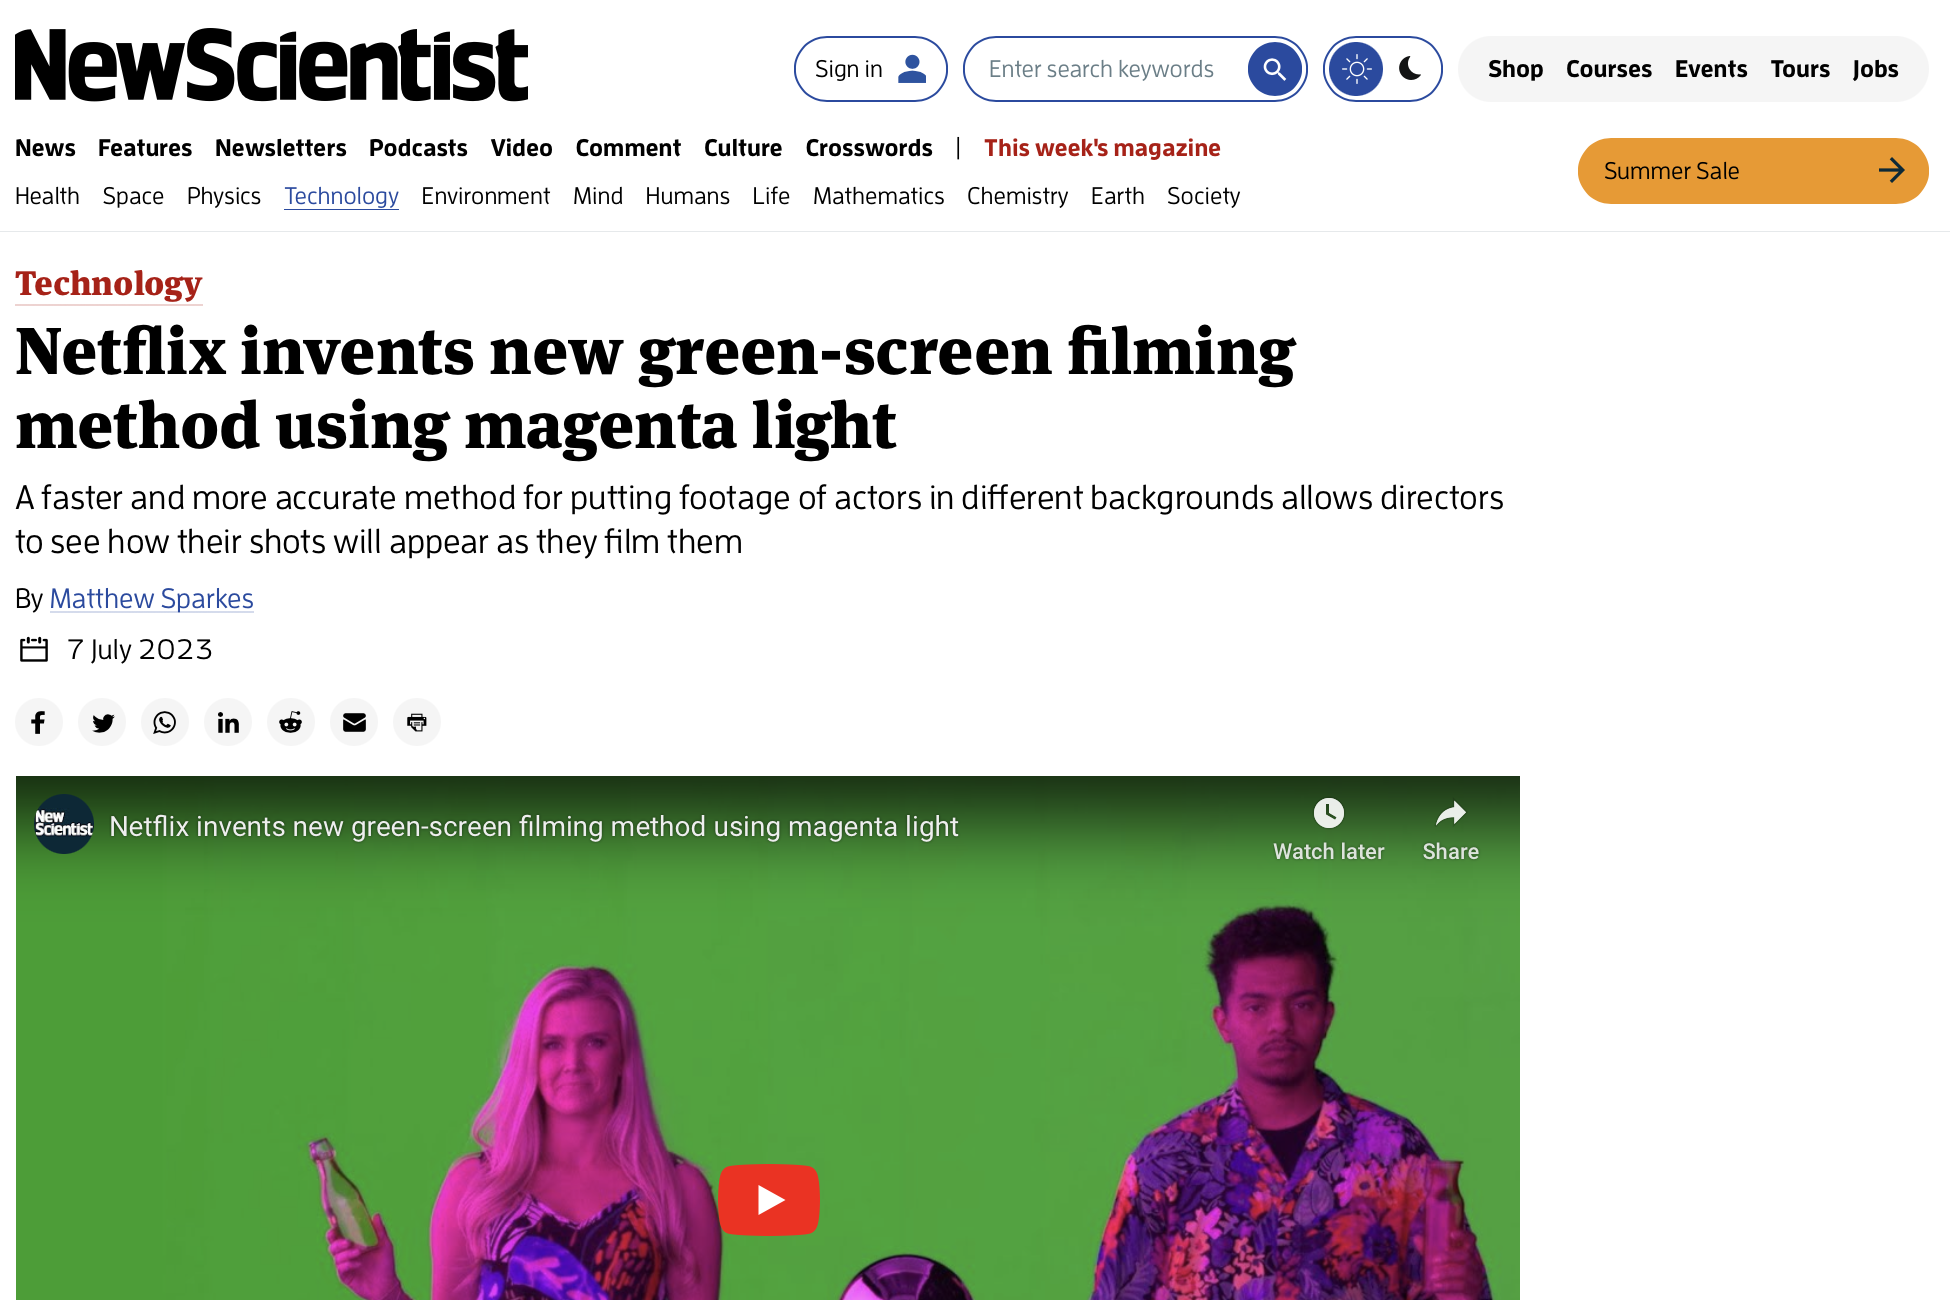 Netflix invents new green-screen filming method using magenta light